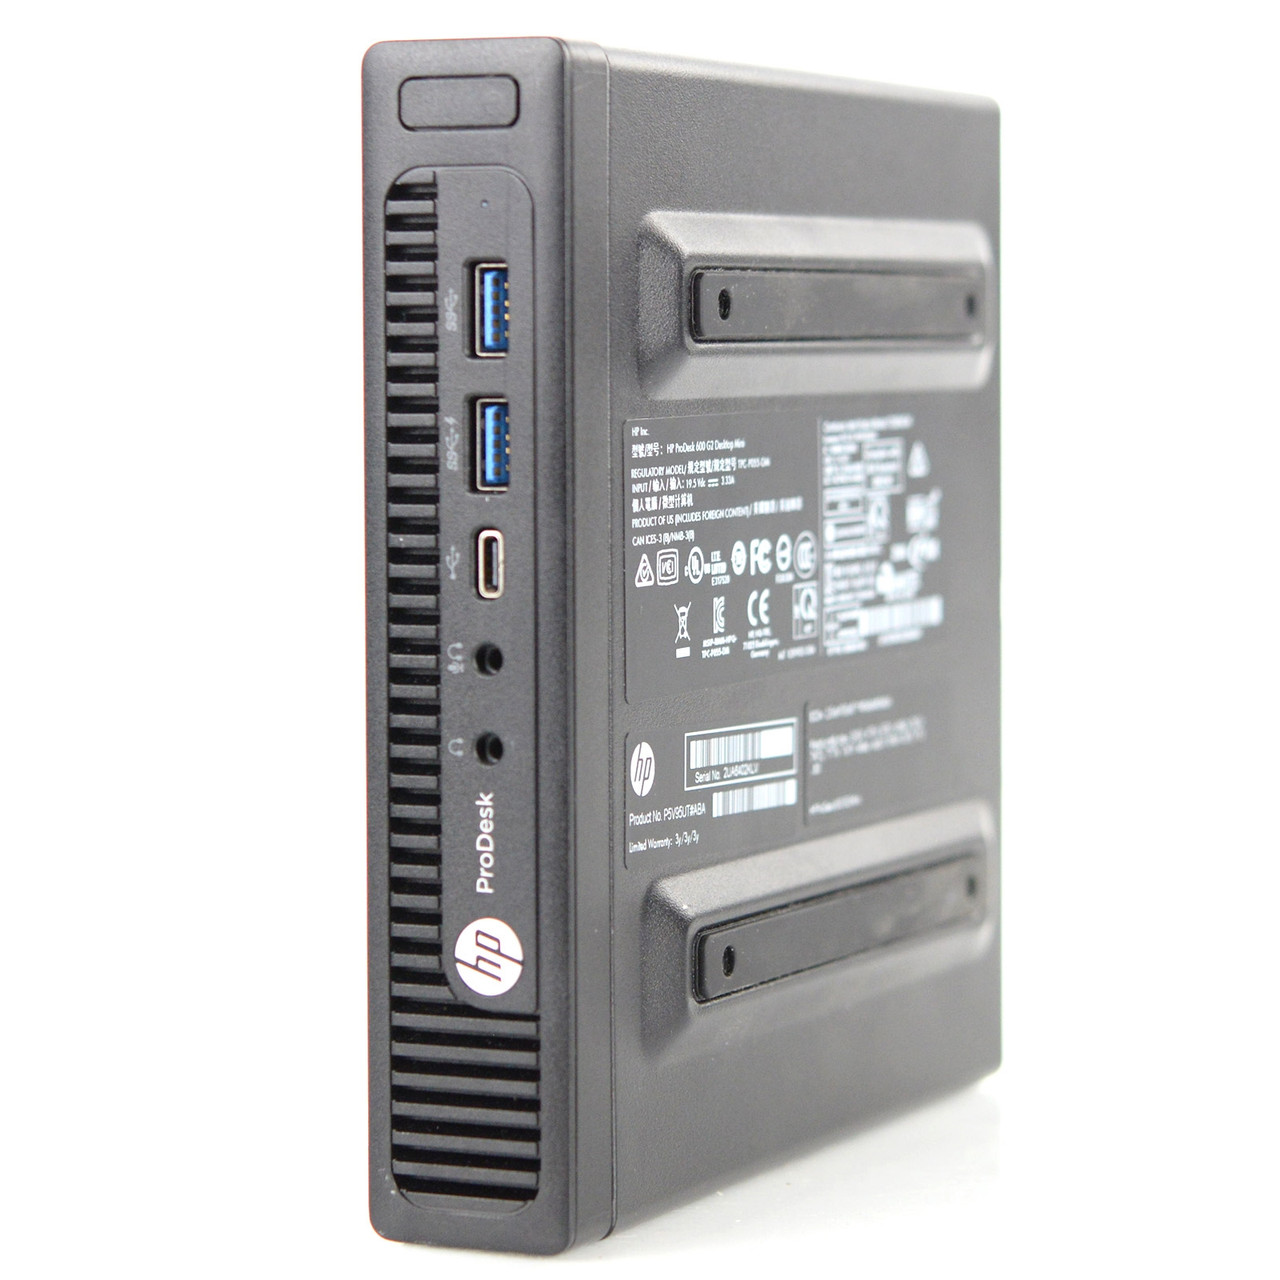 HP ProDesk 600 G2 Desktop Mini